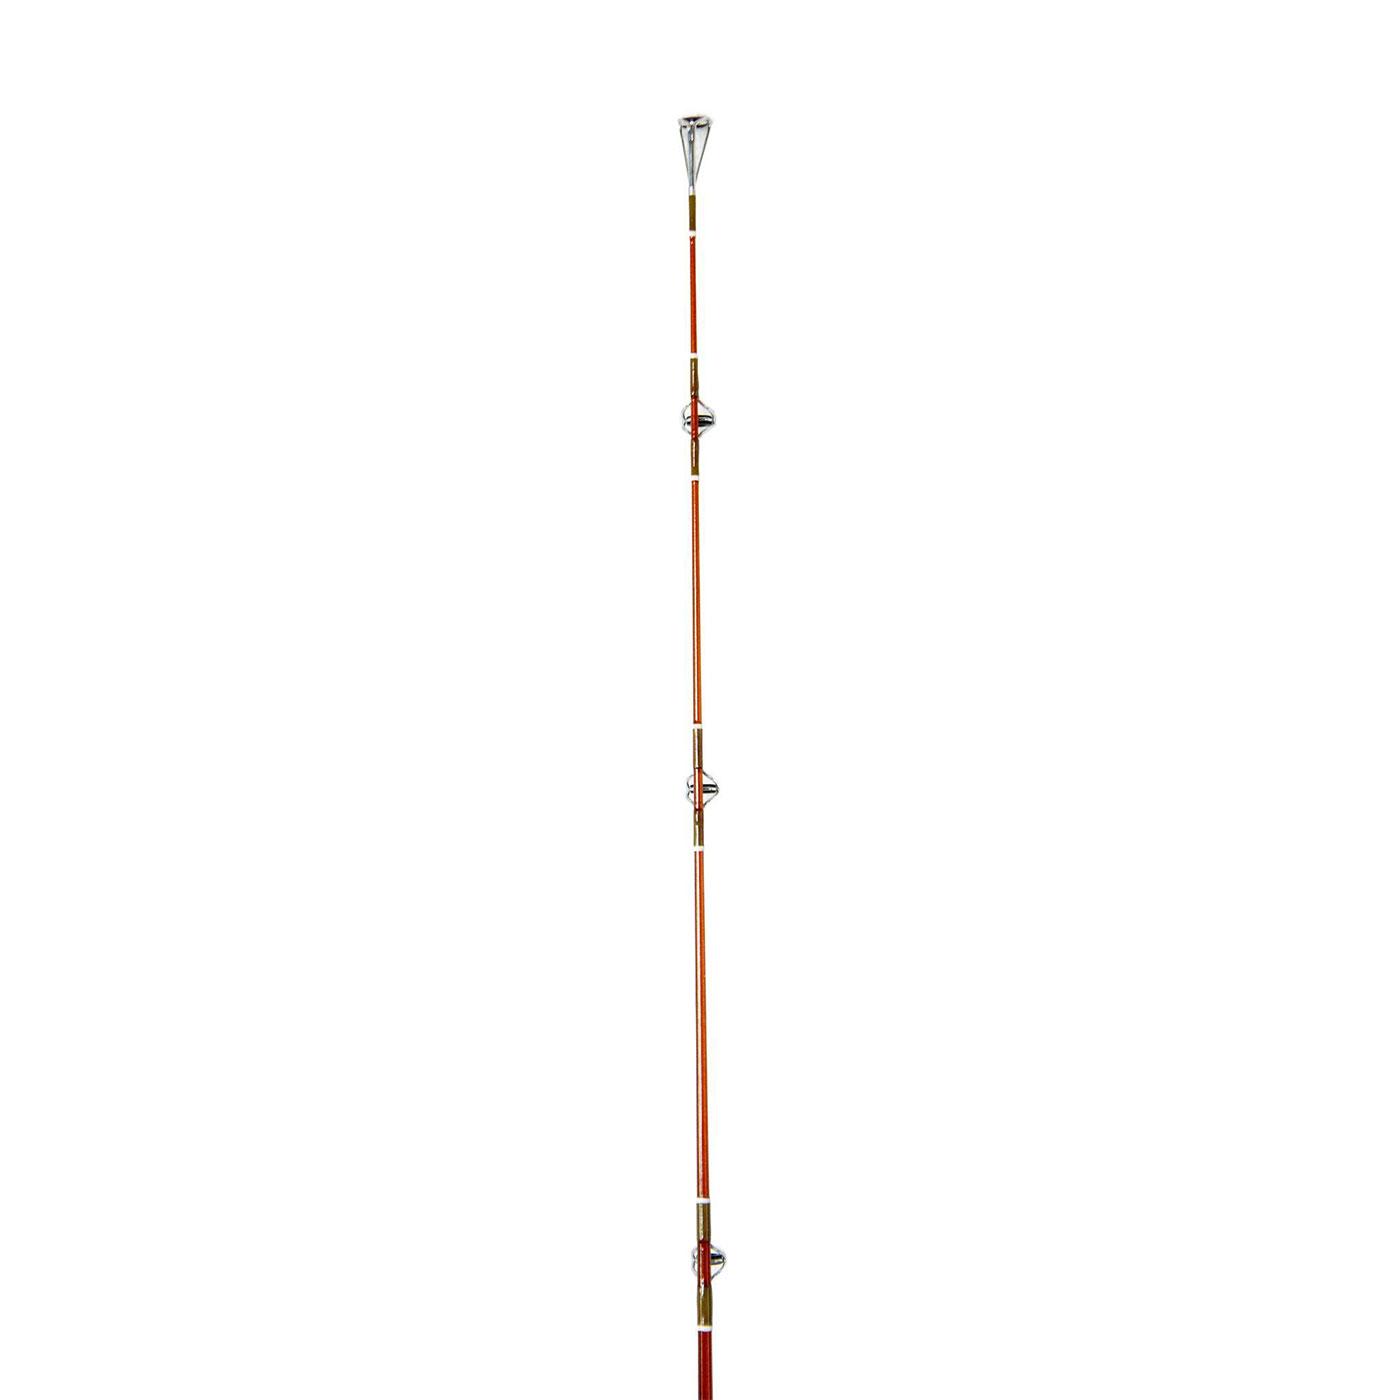 Sold at Auction: Fenwick Lunker Stik 2000 5.5 Ft. 15-30 lb. Line Casting Rod